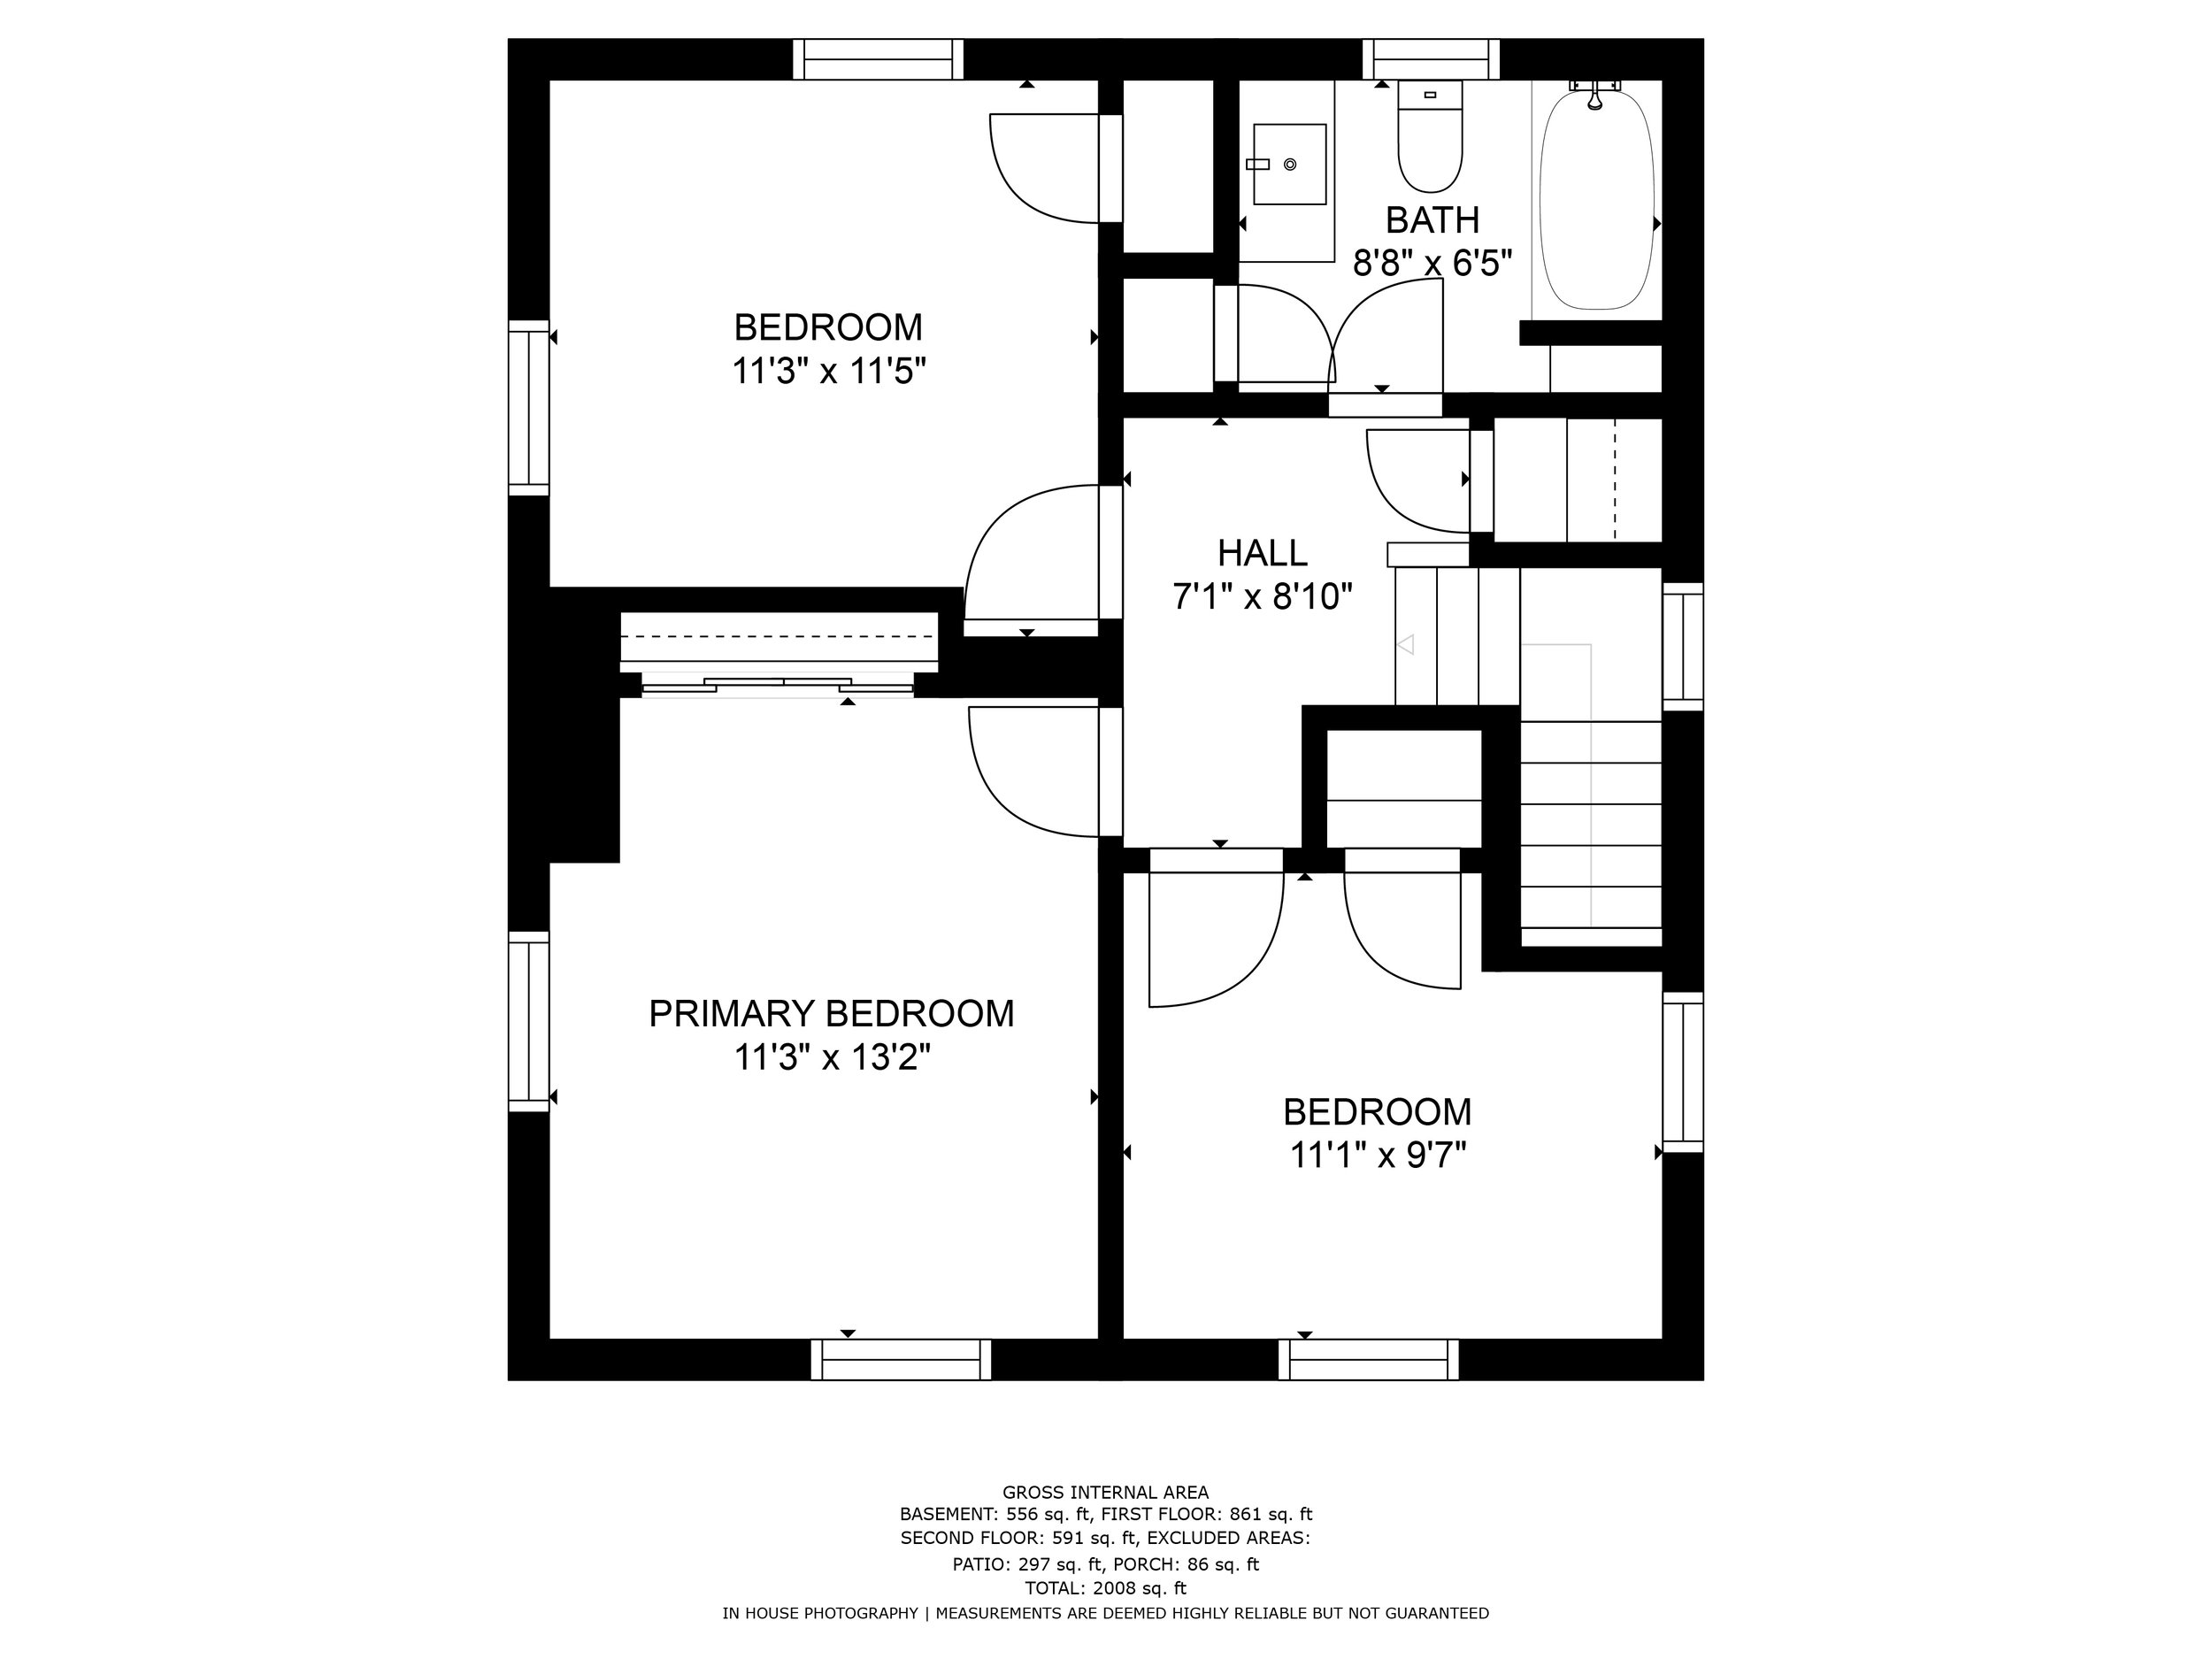 4-333 Meadowbrook floor plan second floor.jpg